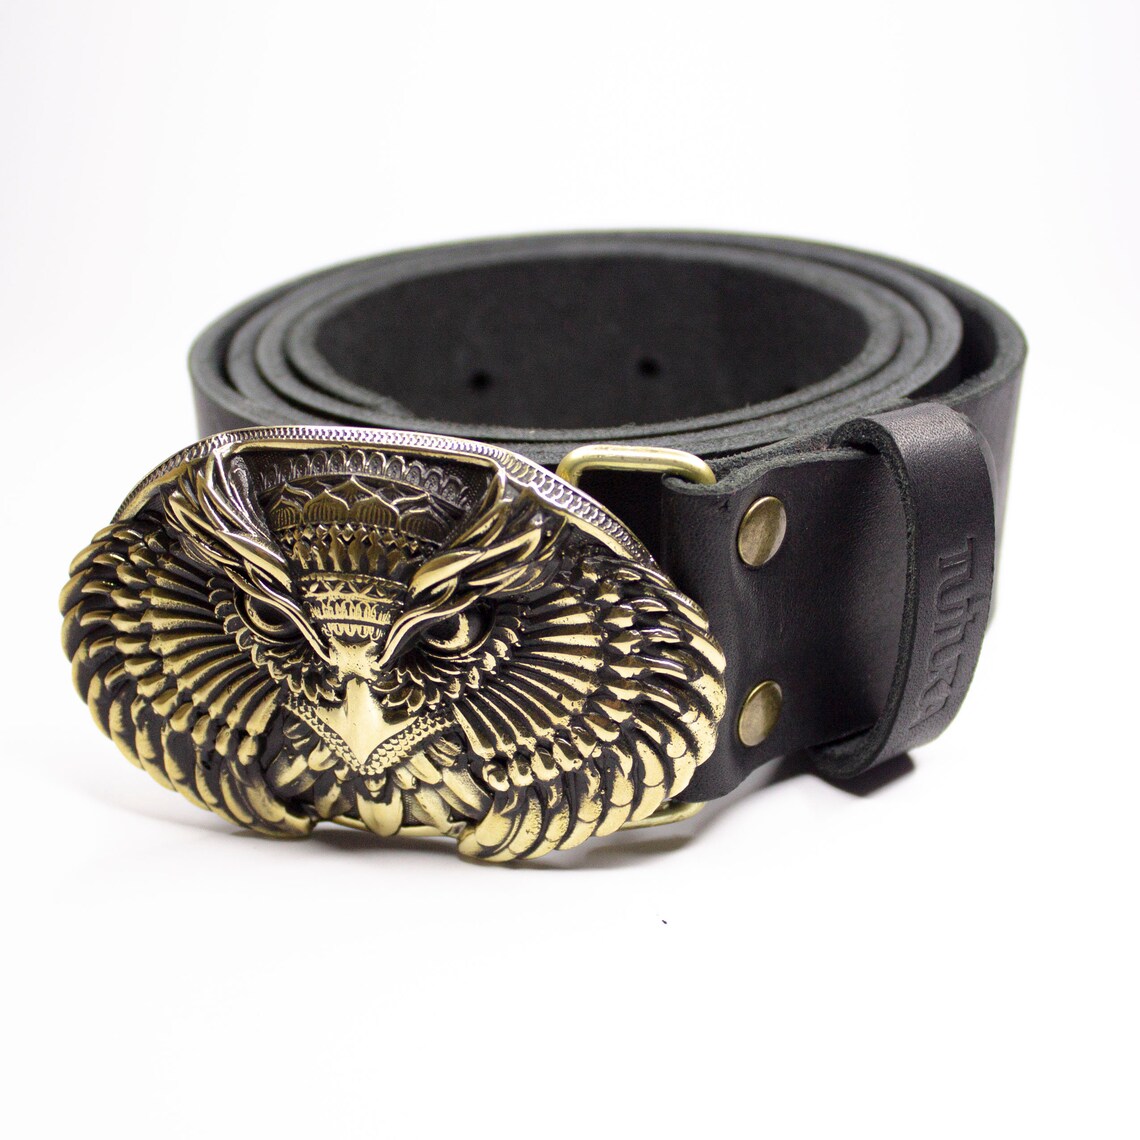 Belt with brass buckle OWL leather belt Owl | Etsy